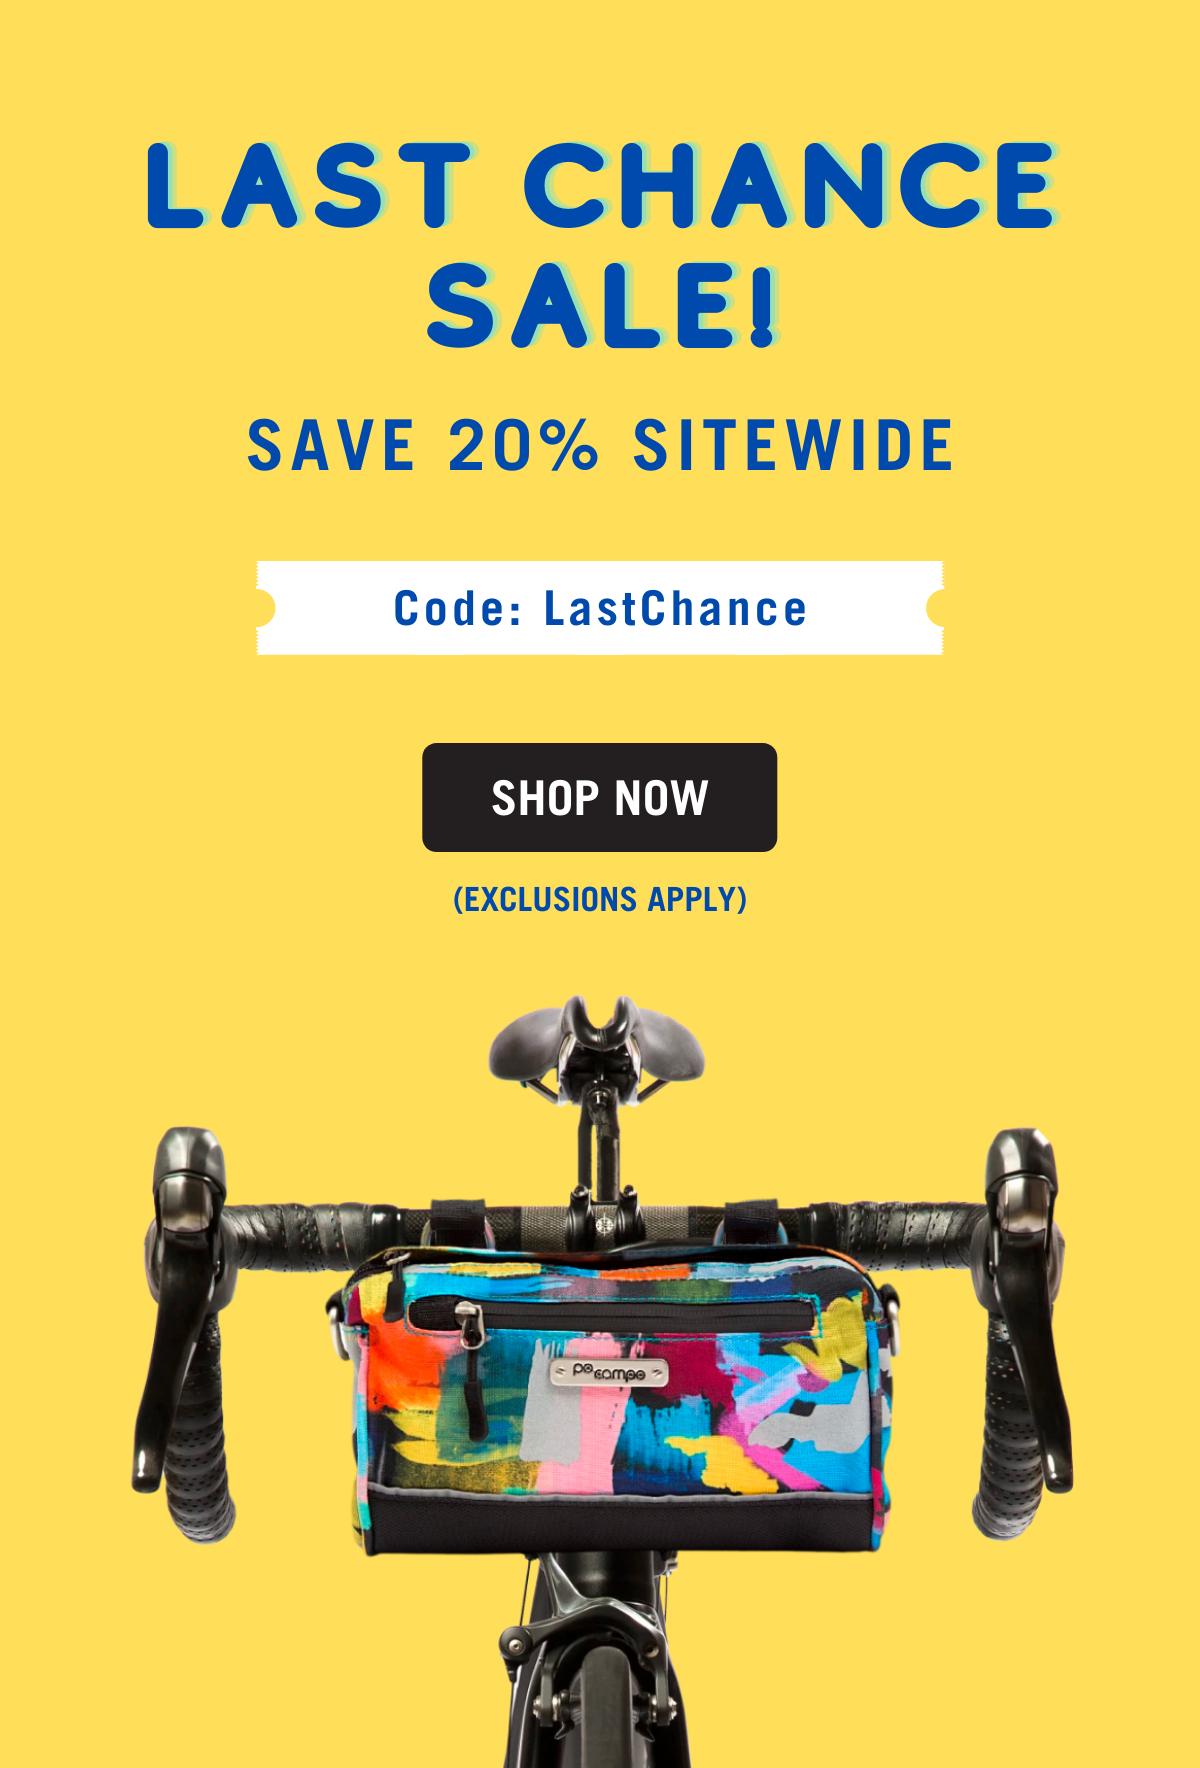 Last Chance Sale! Save 20% Sitewide. Code: LastChance